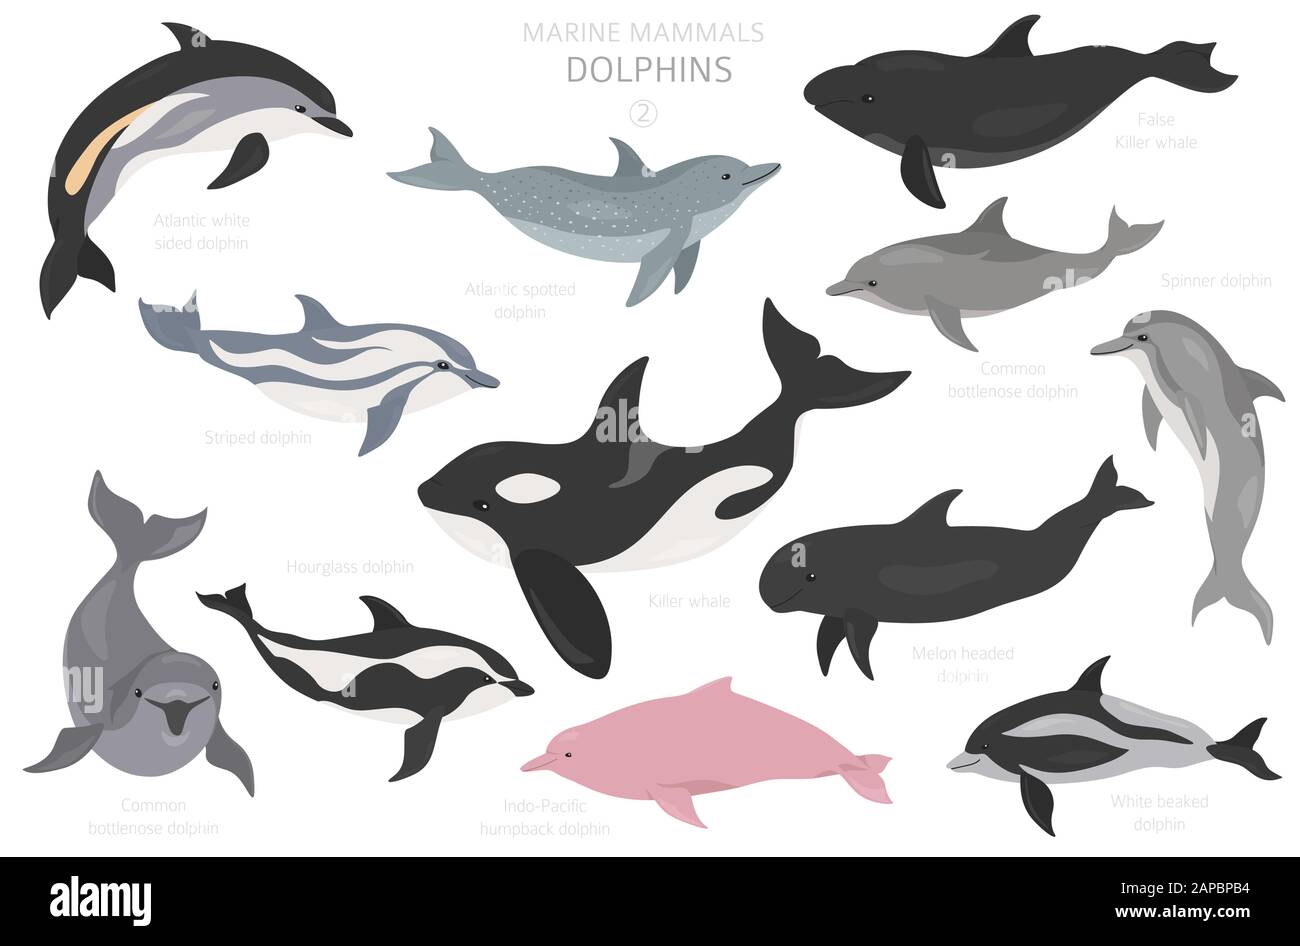 Dolphins set. Marine mammals collection. Cartoon flat style design. Vector illustration Stock Vector